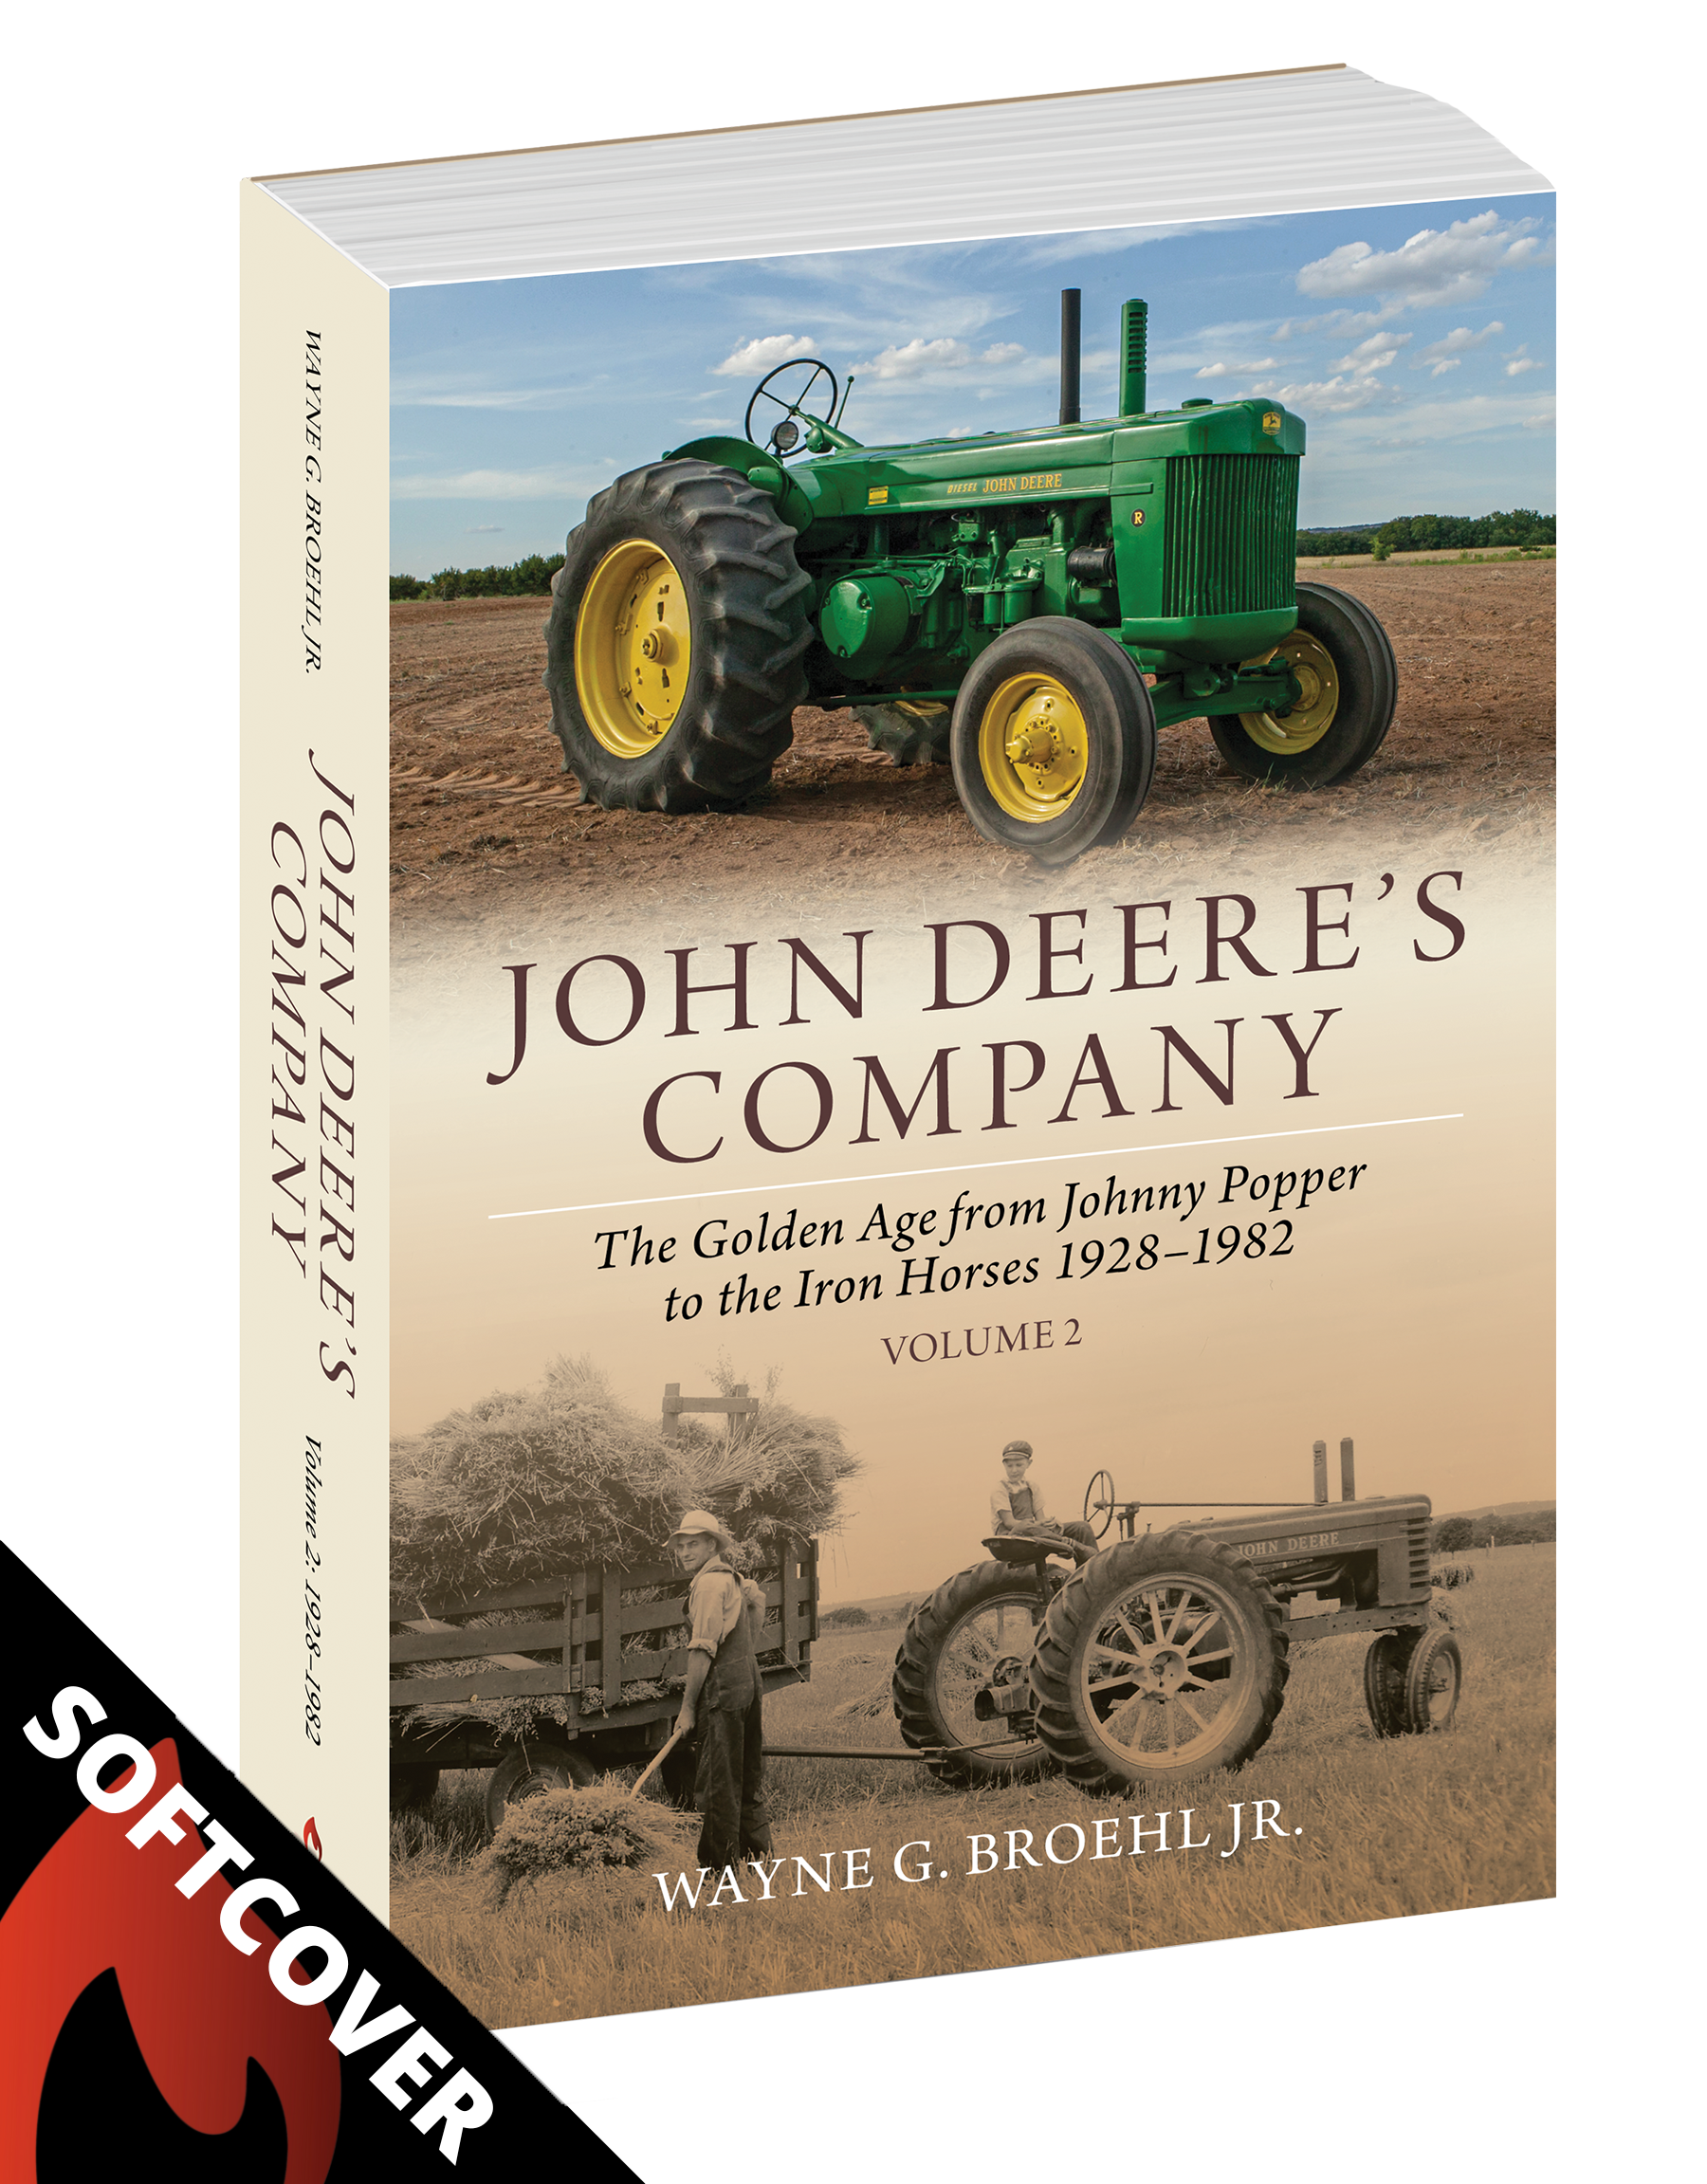 book cover for john deere's company volume 2